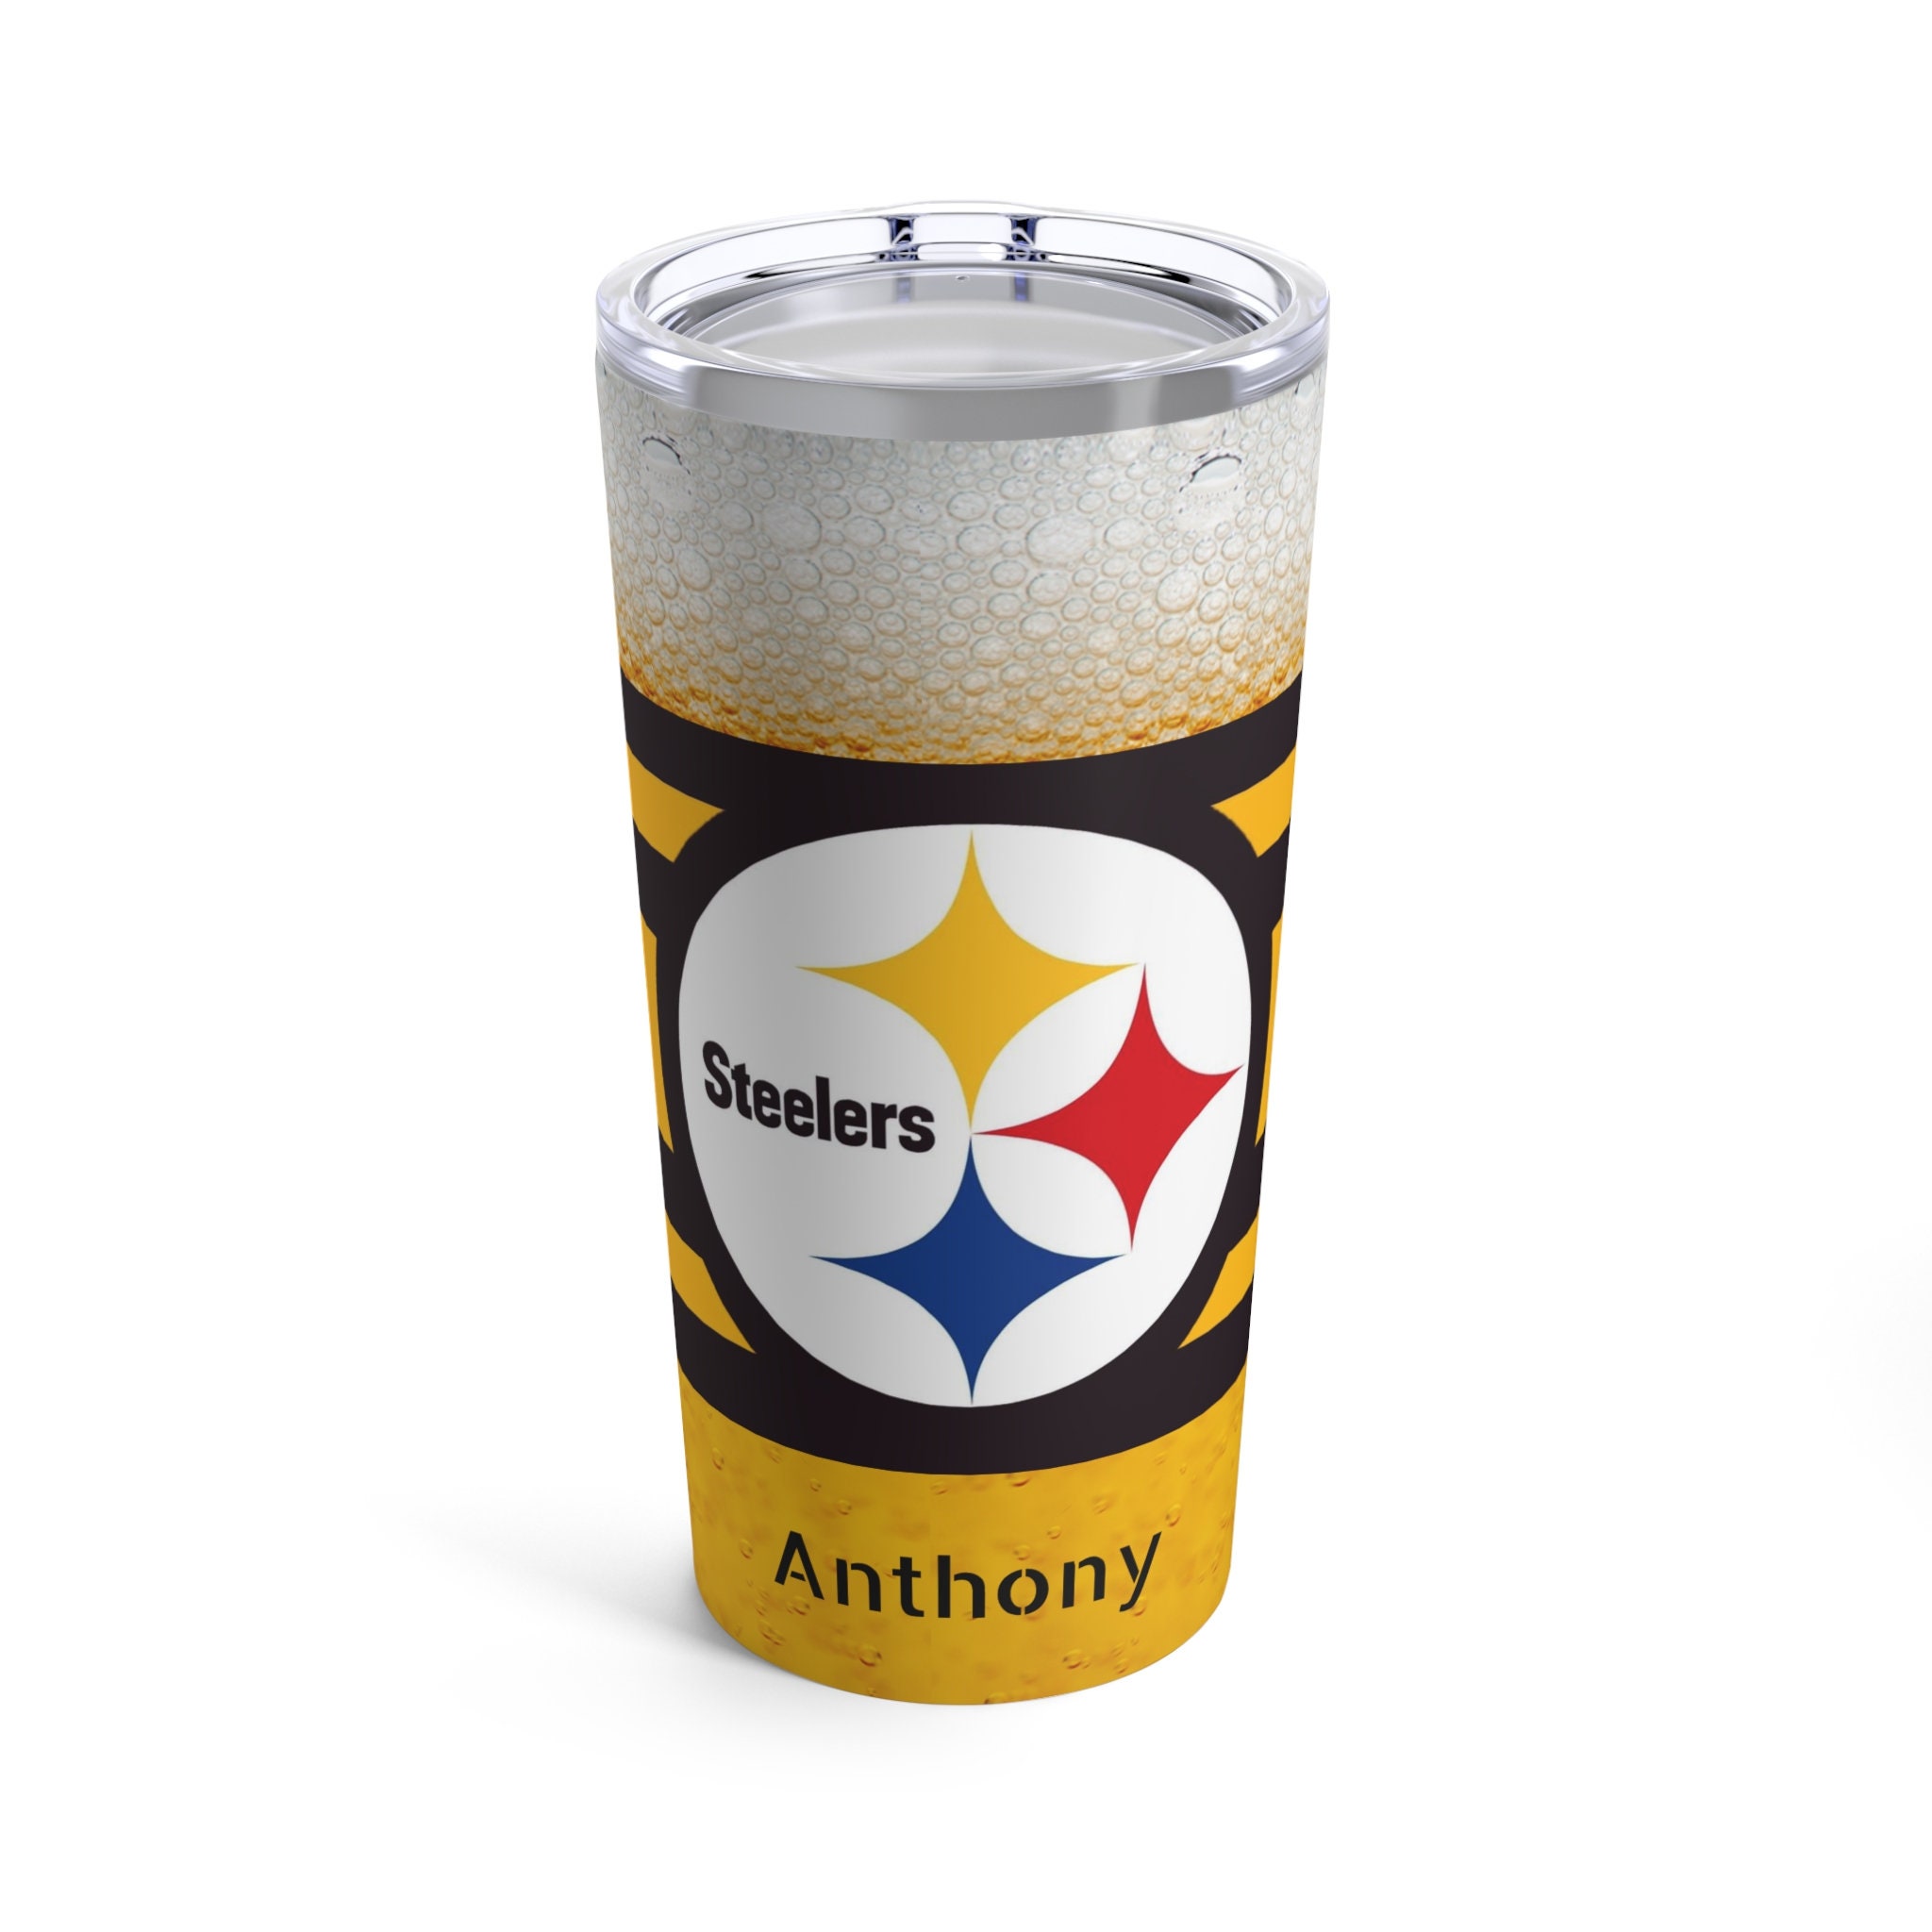 NFL Pittsburgh Steelers 14oz Bubba Travel Mug with Bottle Opener - New!